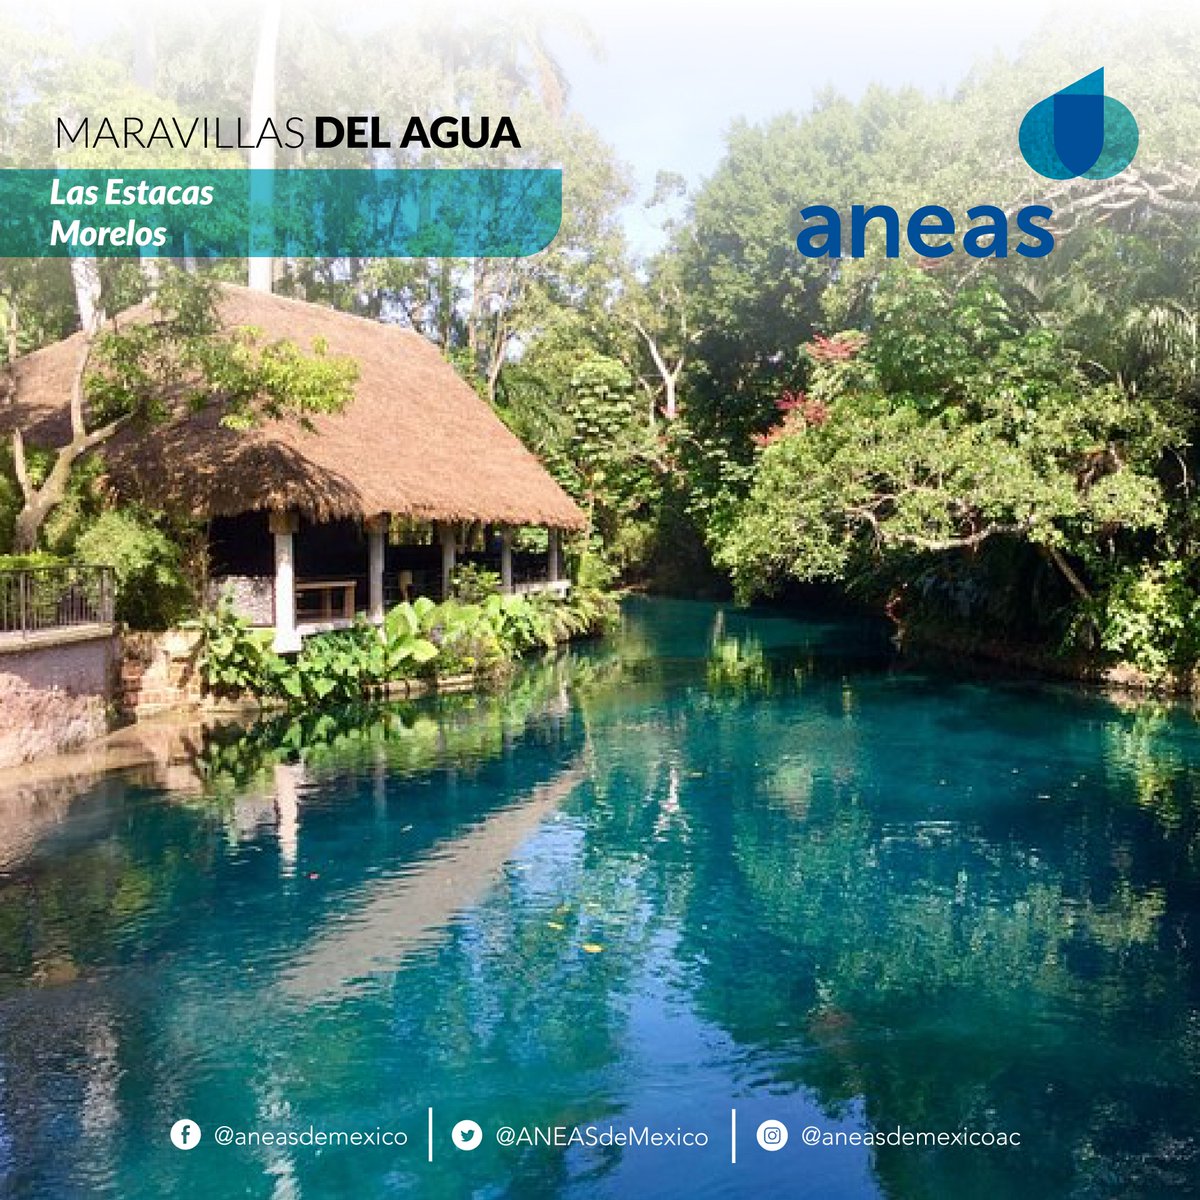 🌊🌊Esta ANP, que consta de 652.17 hectáreas, alberga al manantial 'Las Estacas' que cuenta con un aforo de 6.7 metros cúbicos de agua 💧 por segundo. #ANEAS #LaRedQueSumaFluyeyConecta 💦 #CulturaHidrica #MaravillasDelAgua